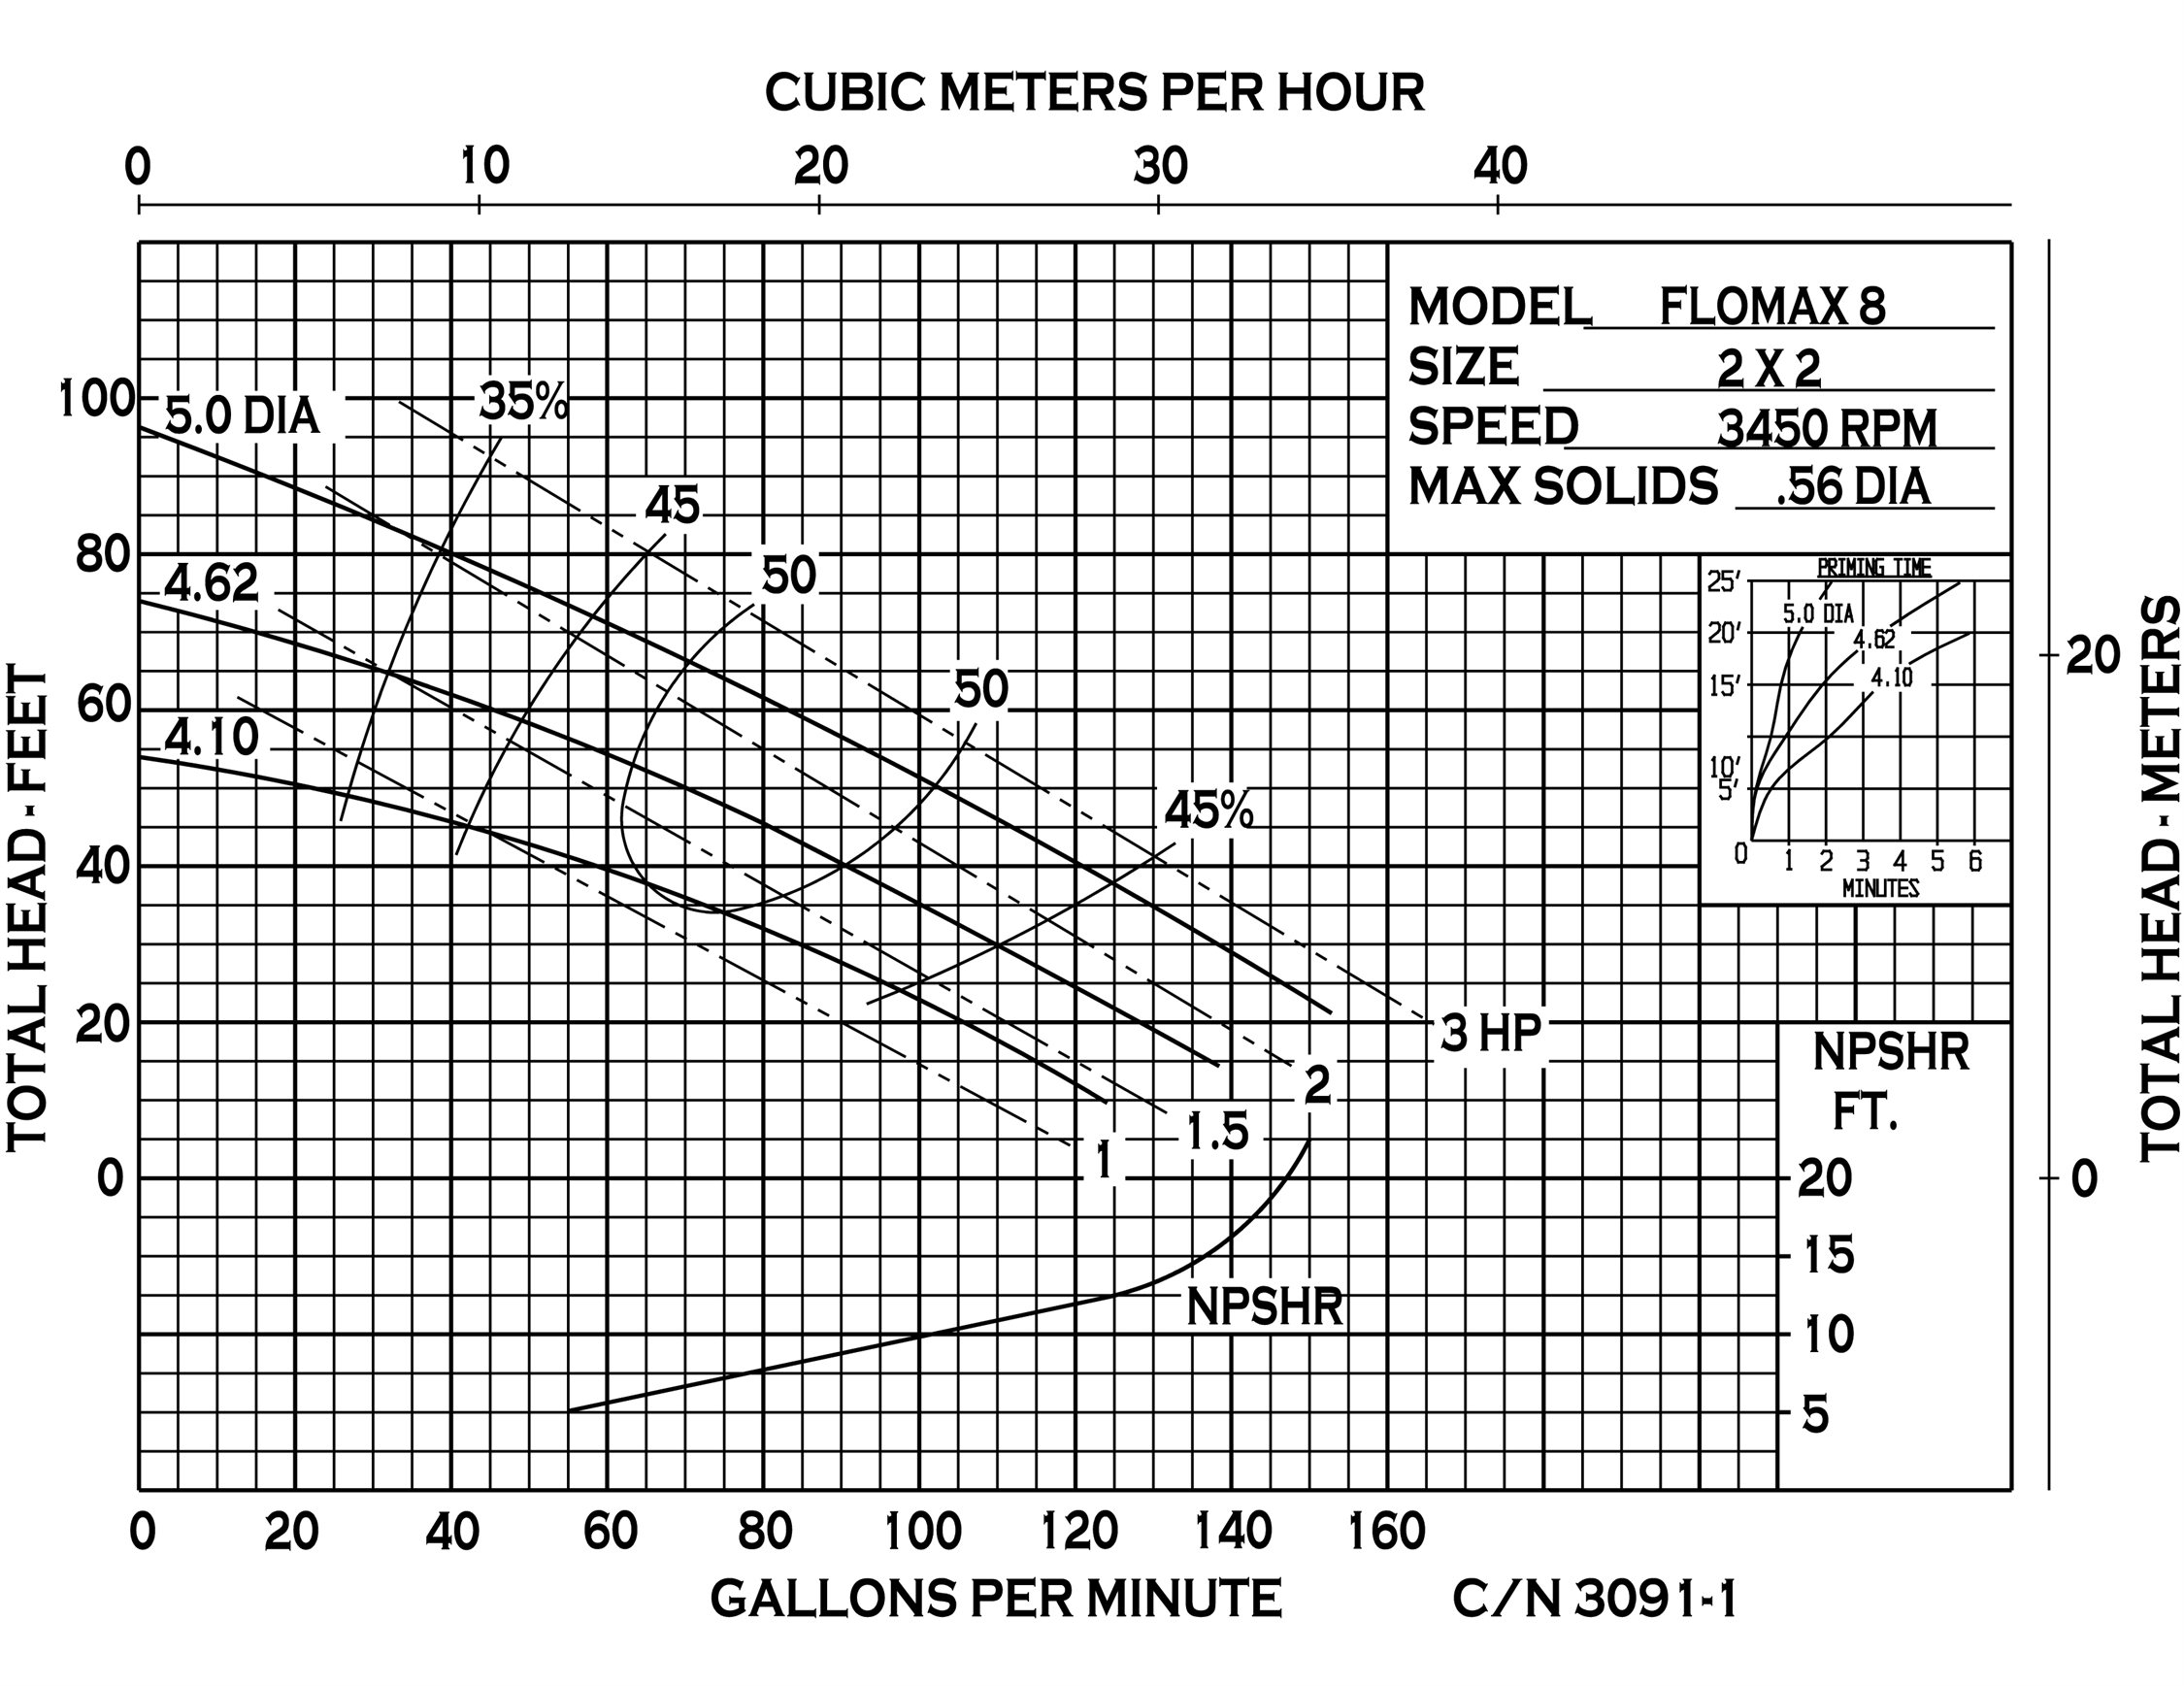 flomax-8-316-ss-industrial-vacuum-pump_curve-3091-1